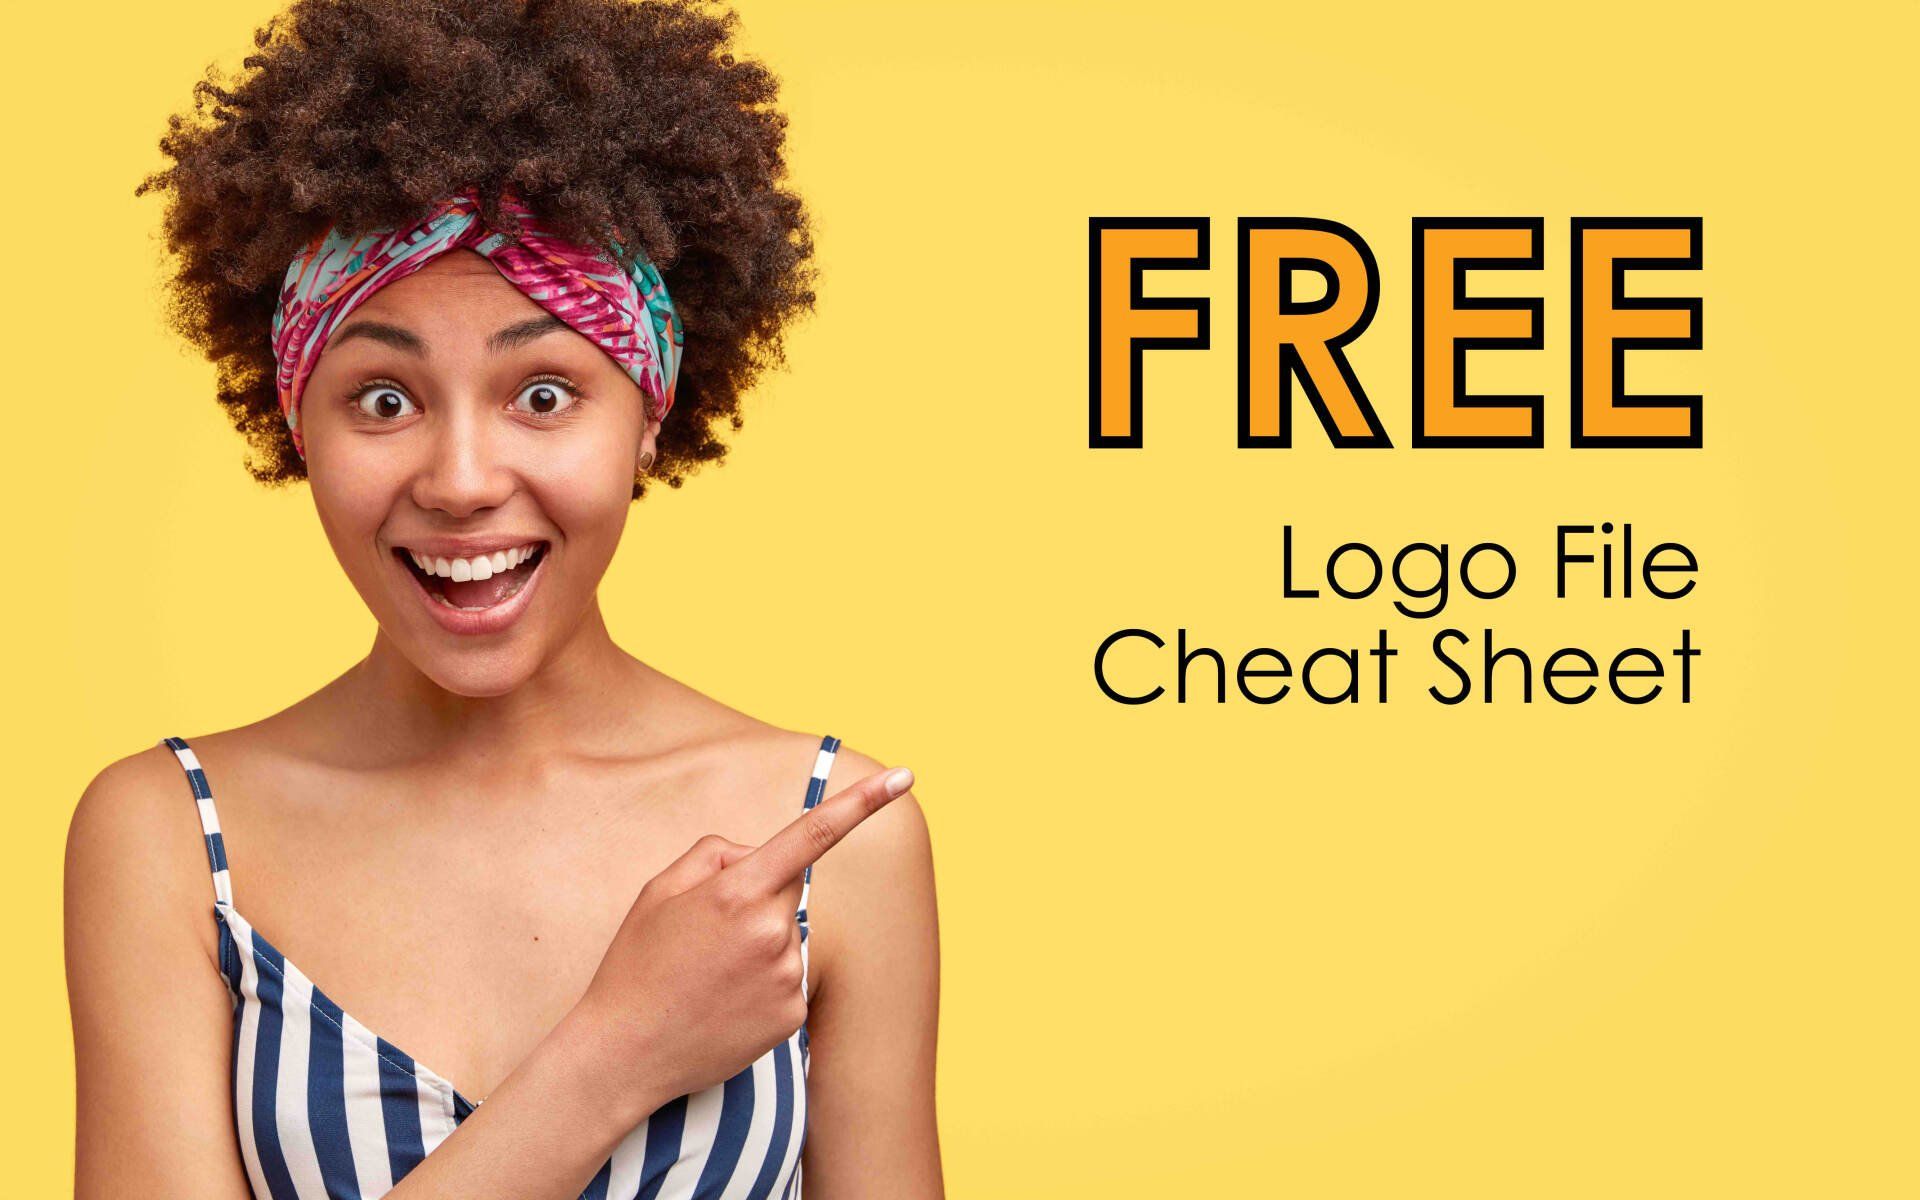 free-logo-file-cheat-sheet